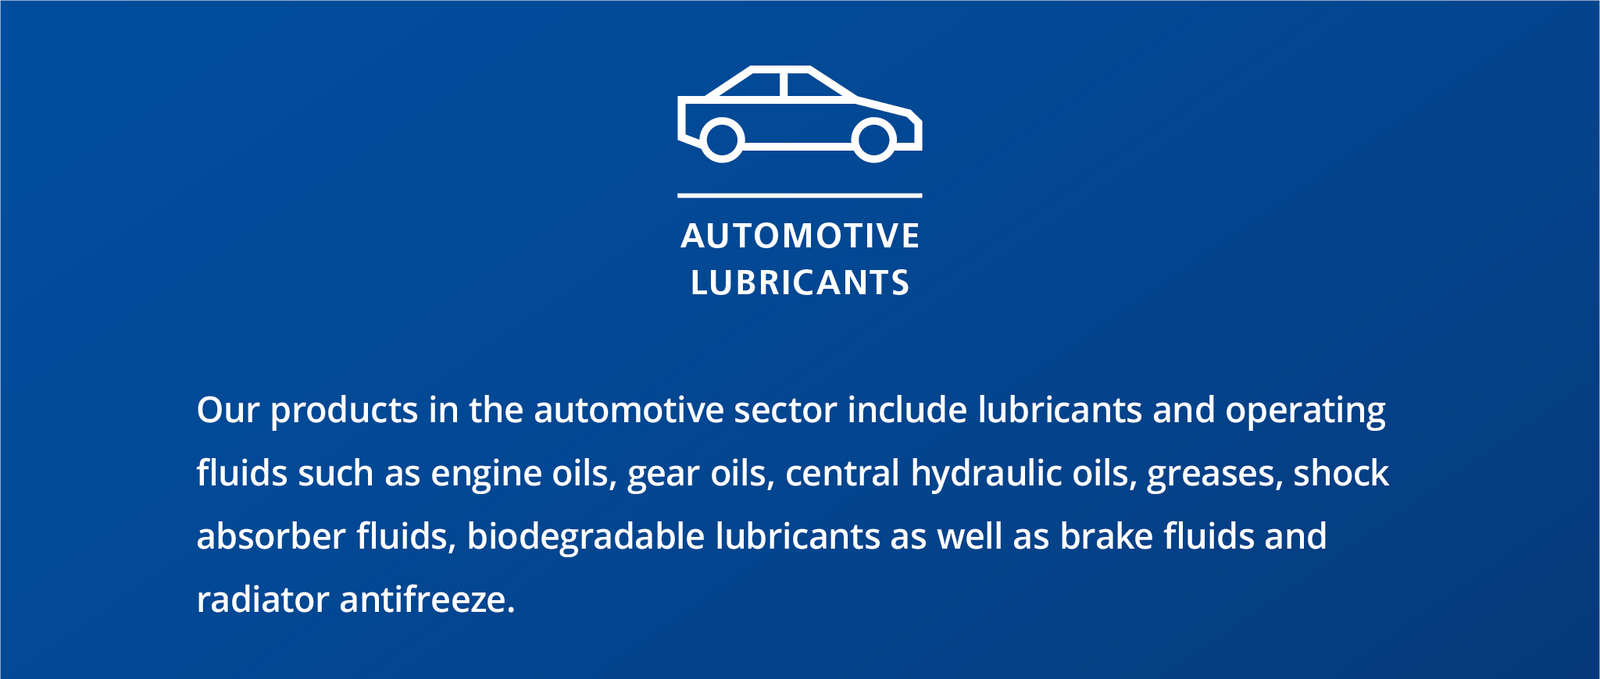 Blue information box explaining the automotive sector of FUCHS.